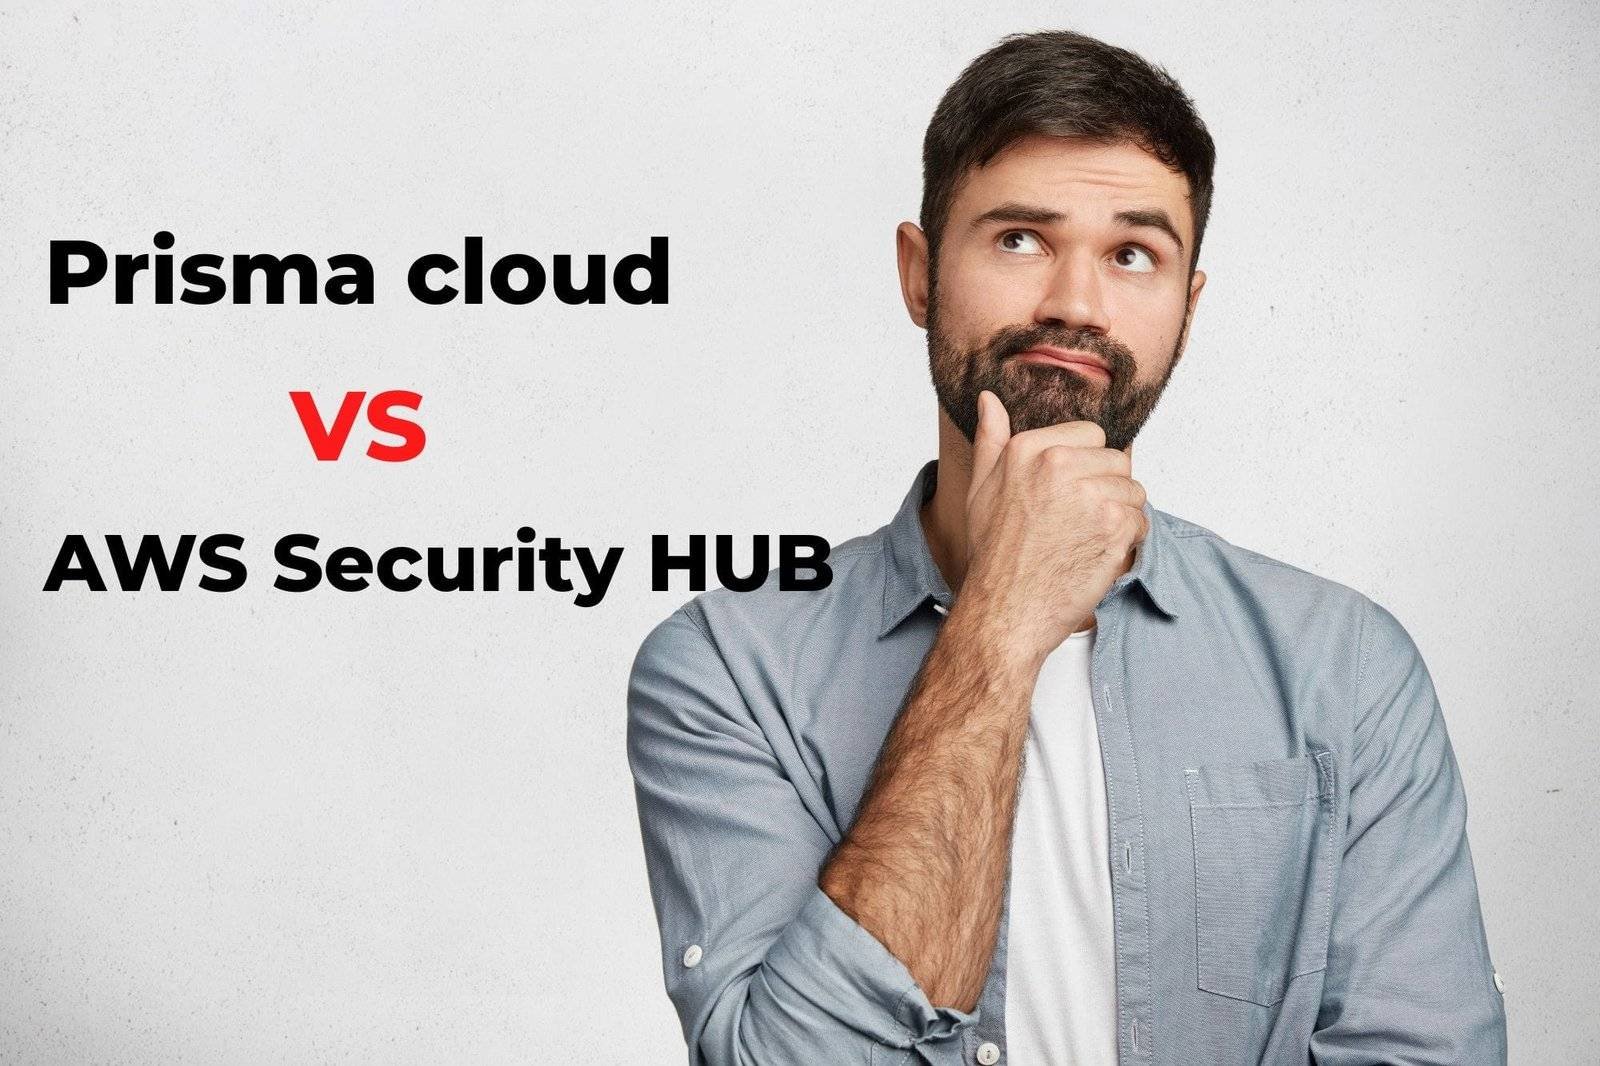 prisma cloud vs aws security hub